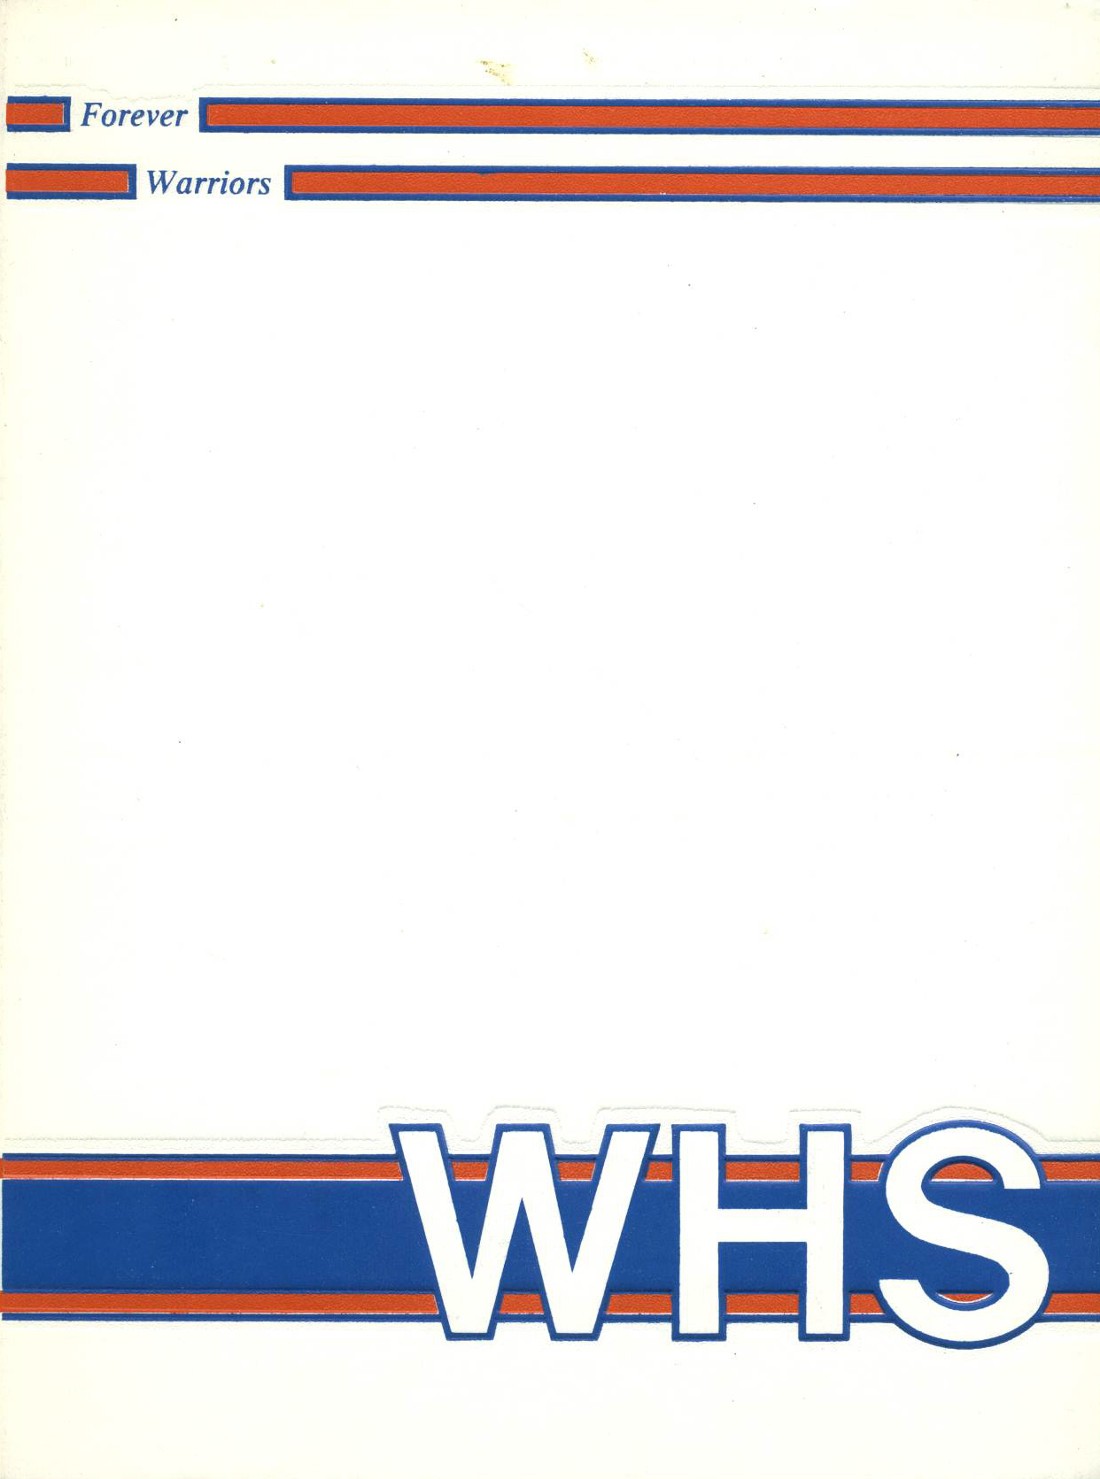 1982 yearbook from Westlake High School from Westlake village, California